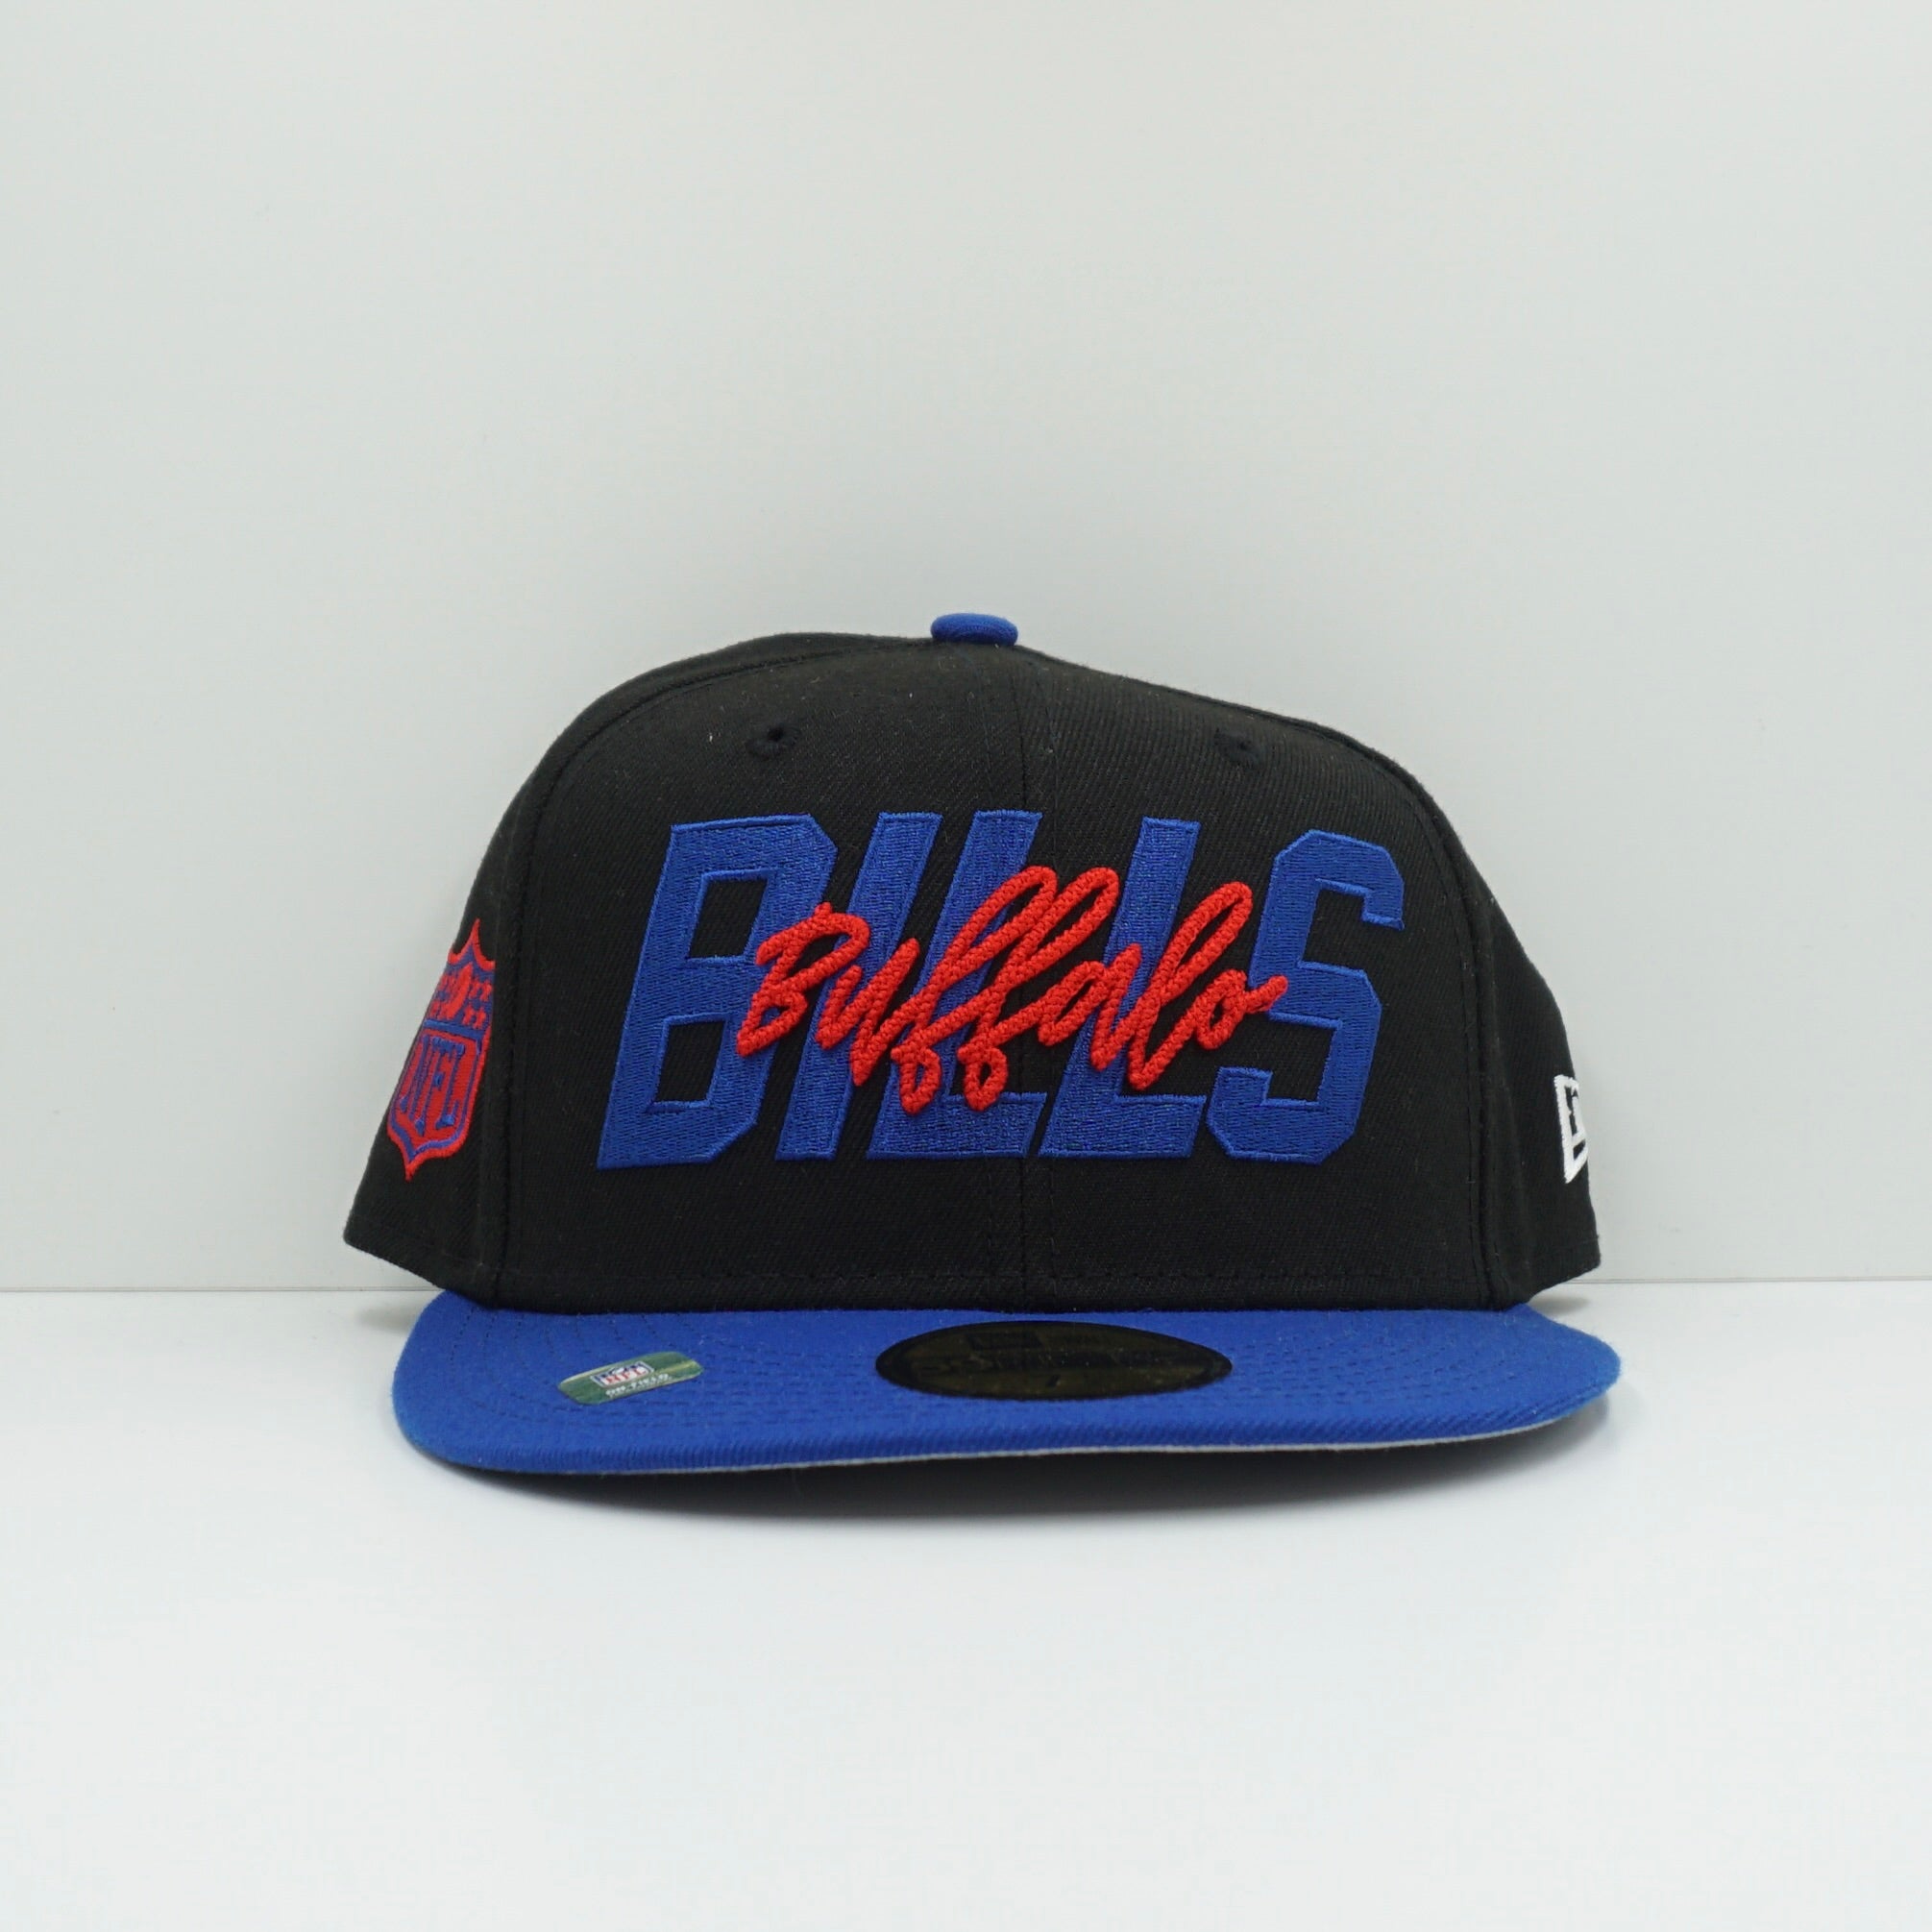 New Era Buffalo Bills Black/Blue Fitted Cap